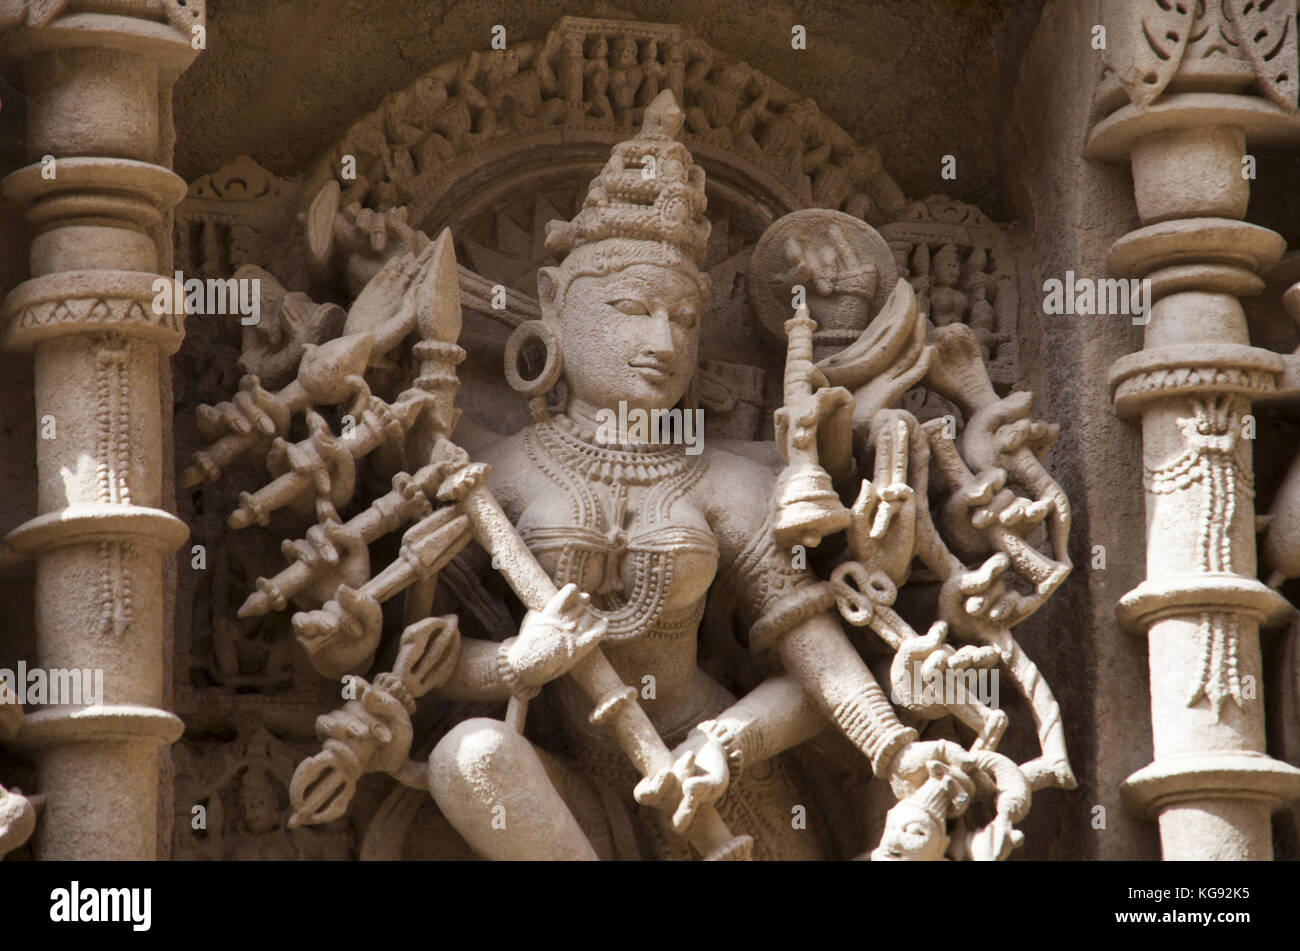 L'idole de Mahishasuramardini sculptés sur la paroi interne de Rani ki Vav, une cage de façon complexe sur les rives de la rivière Saraswati. Patan, Gujarat, Inde. Banque D'Images